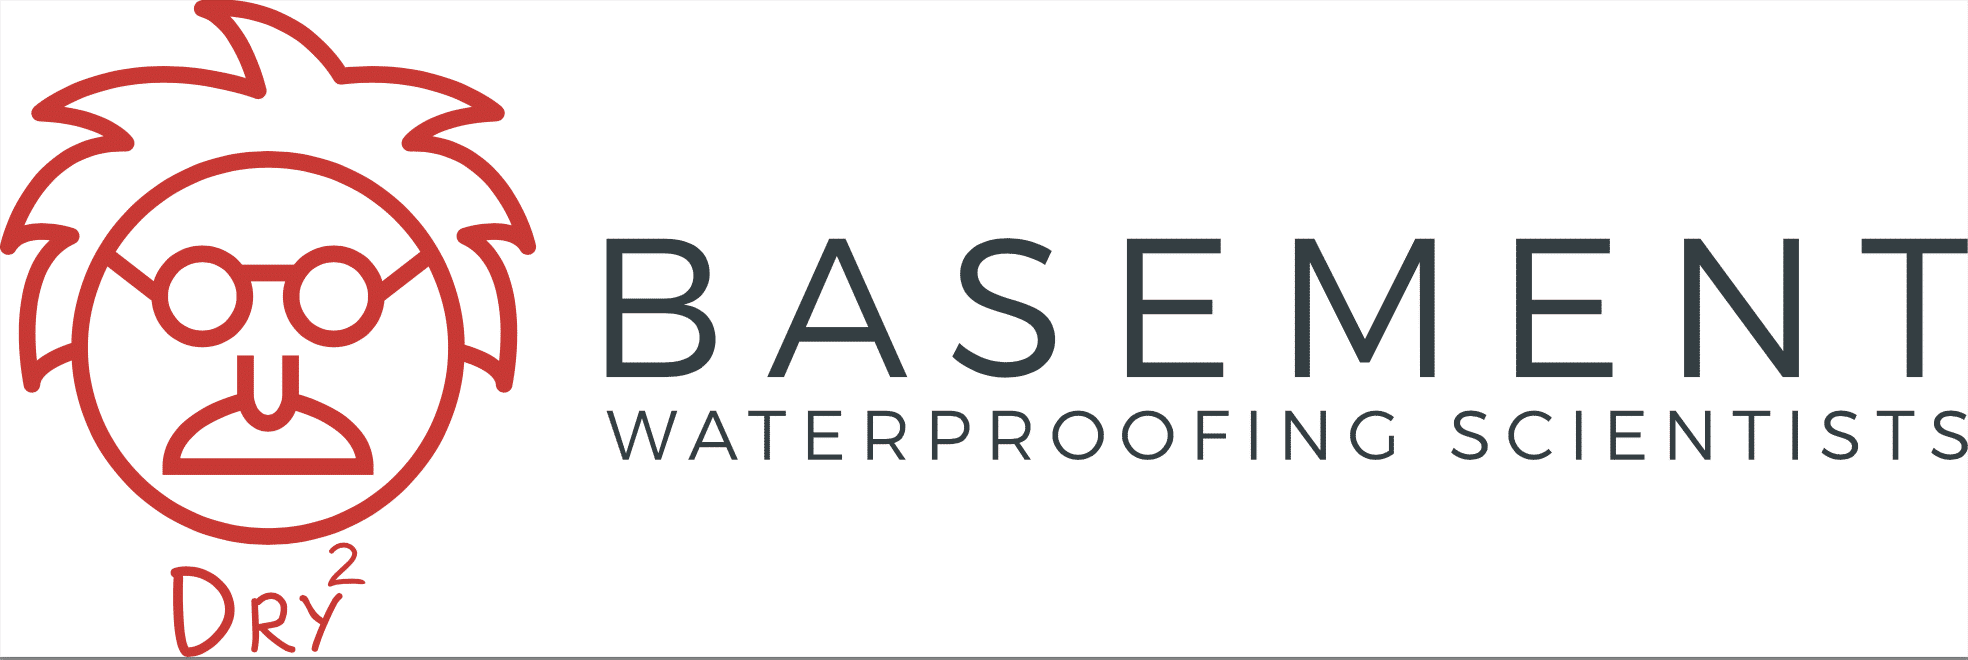 Basement Waterproofing Scientists PA